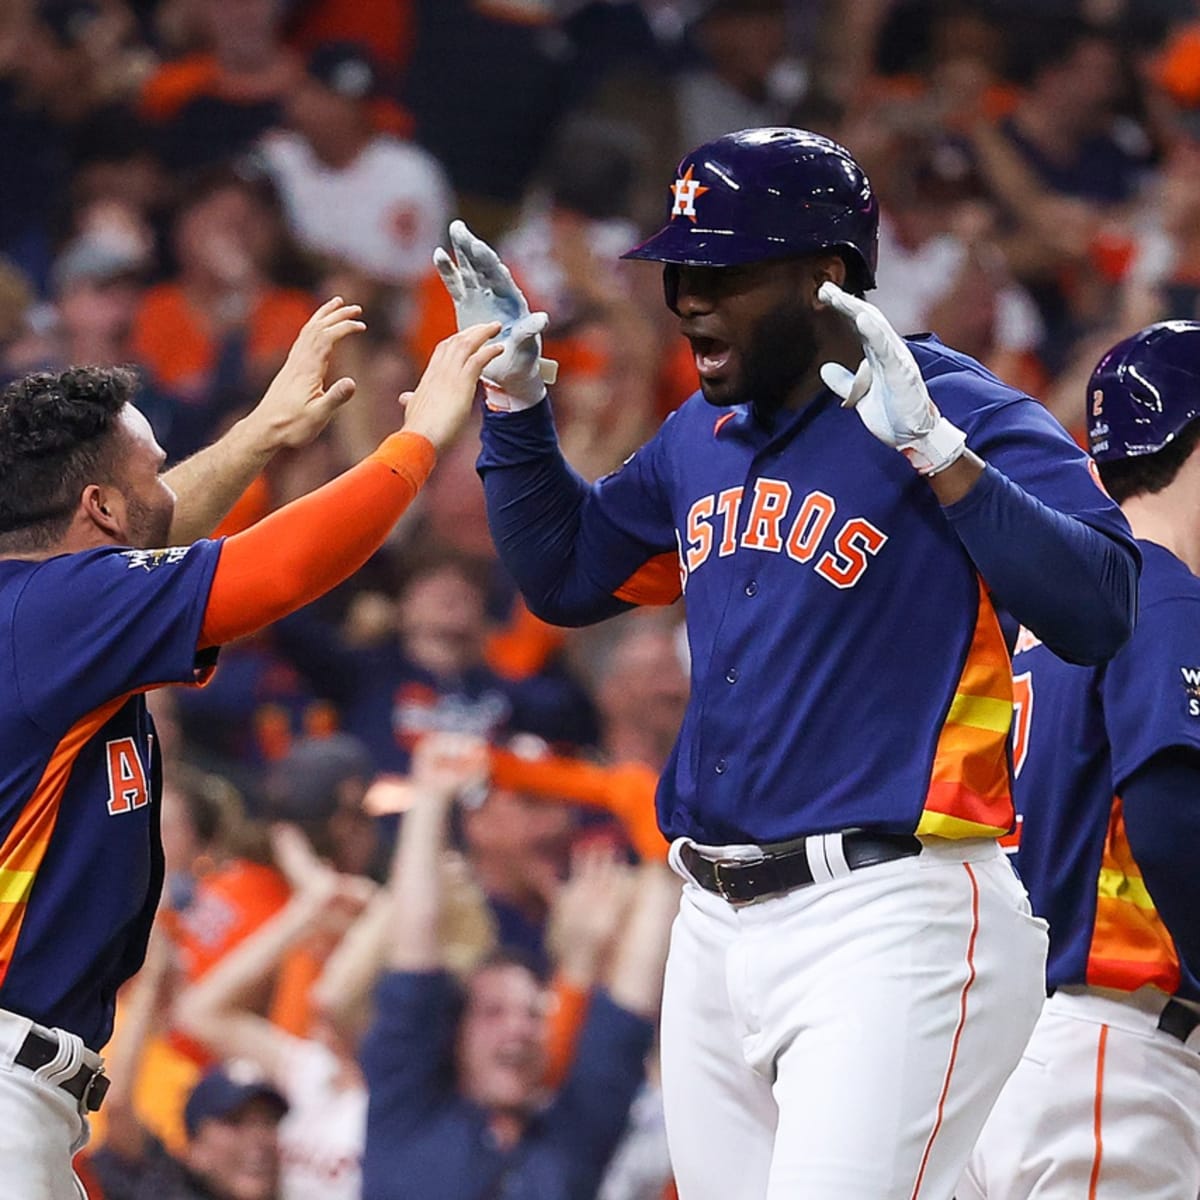 WATCH: Yordan Alvarez Home Run Gives Astros 3-1 Lead in World Series Game 6  - Fastball